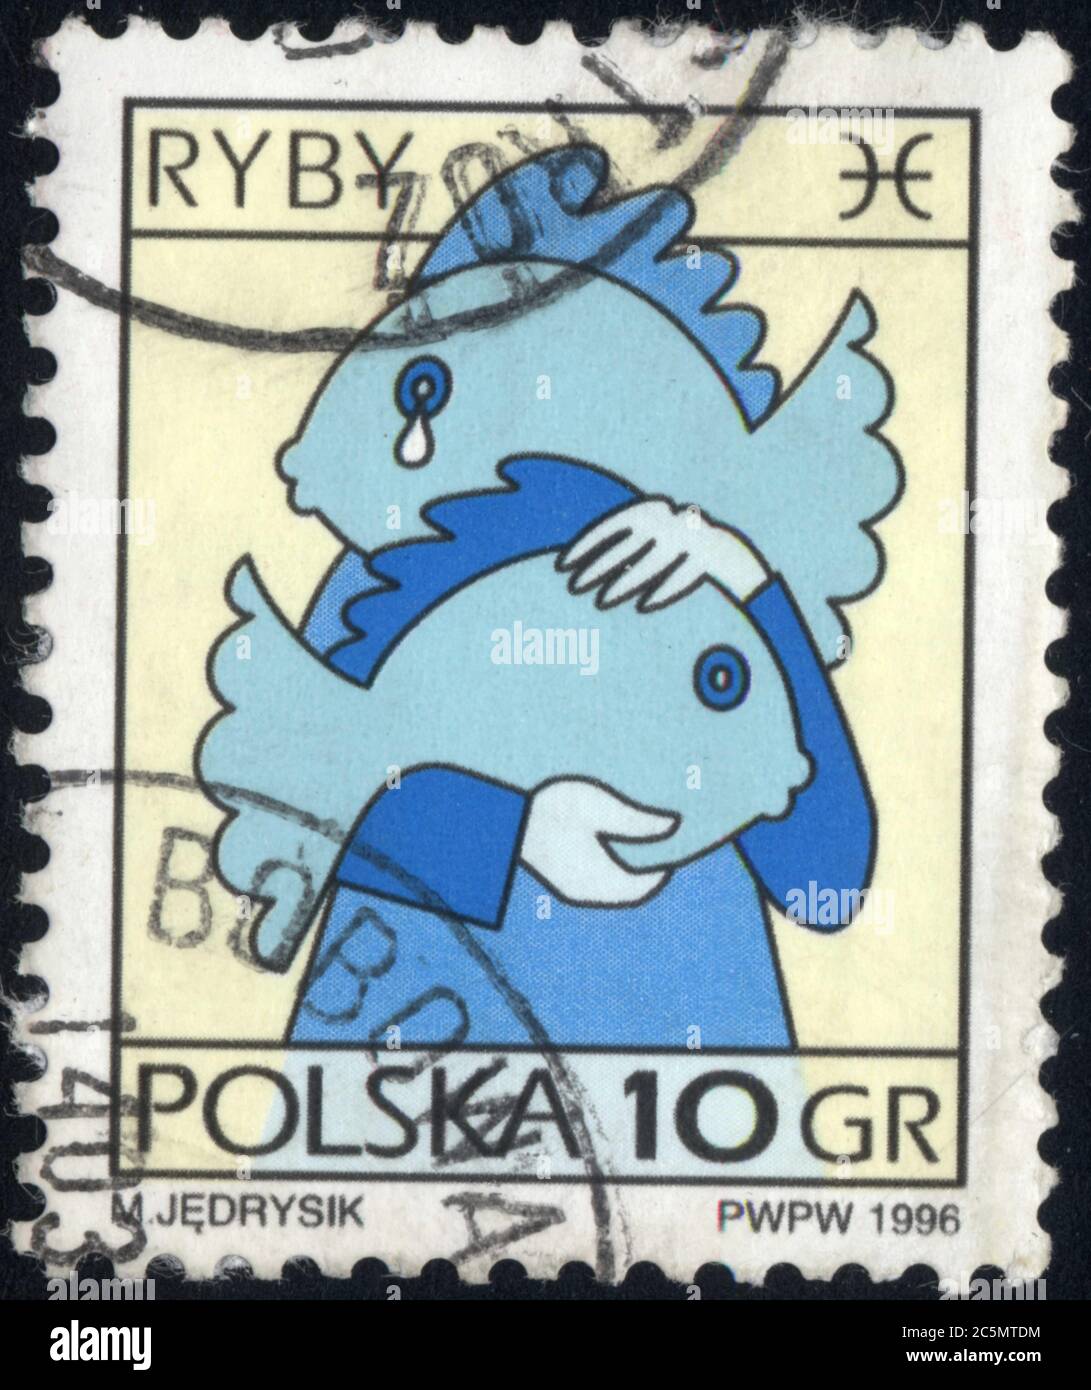 Timbre oblitéré Ryby. Polska. 10 GR. 1996. Signe de zodiac Stock Photo